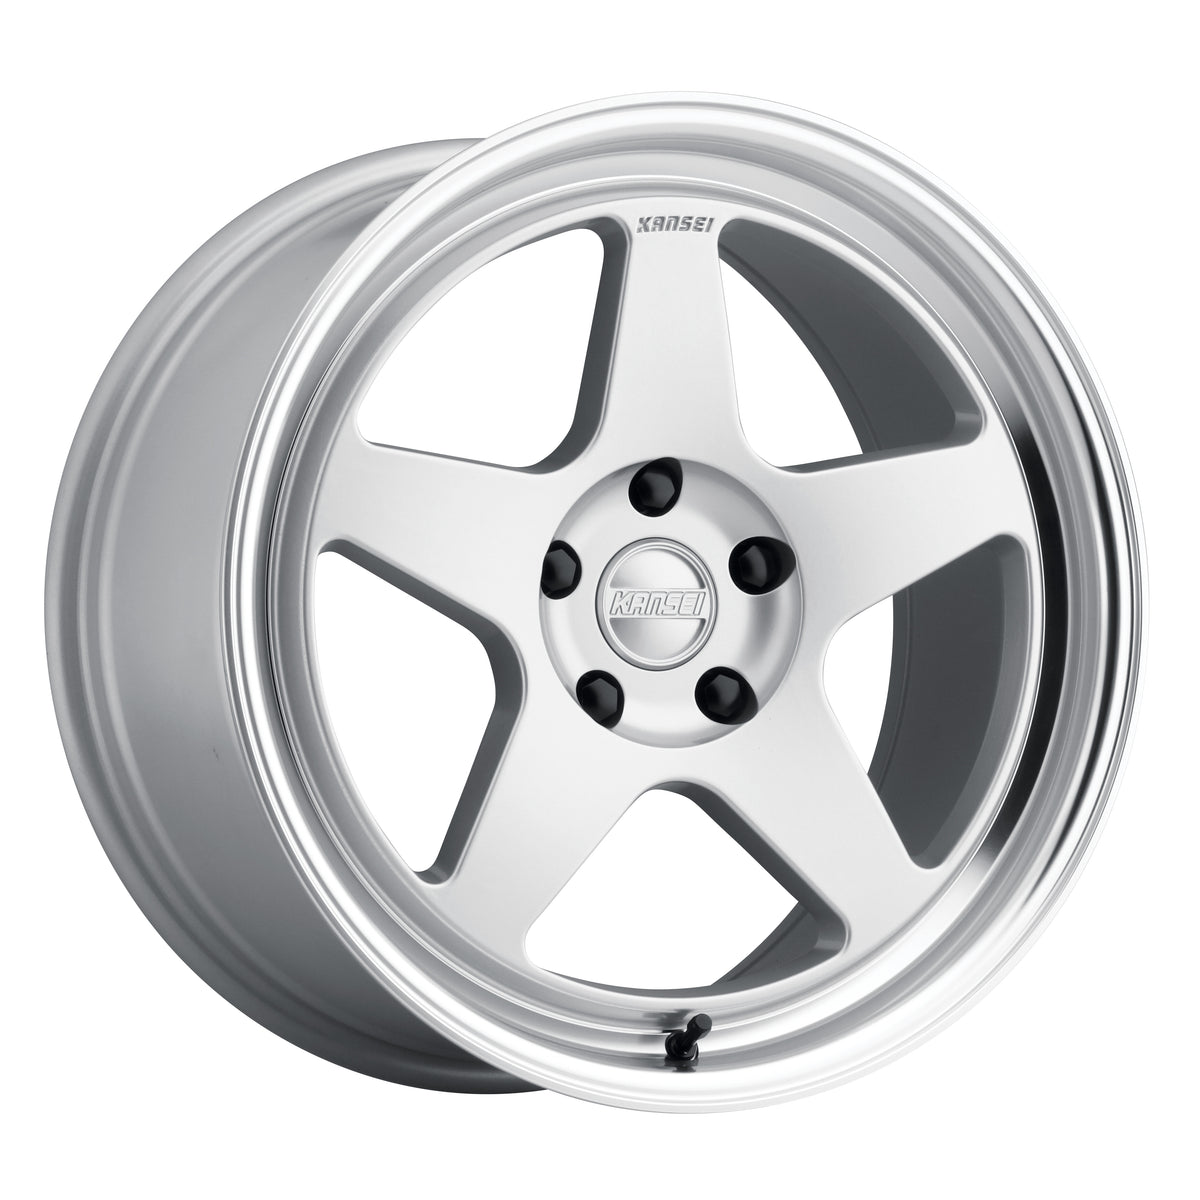 K12H KNP Wheel, Size: 18" x 8.50", Bolt Pattern: 5 x 100 mm, Backspace: 6.13" [Finish: Hyper Silver]